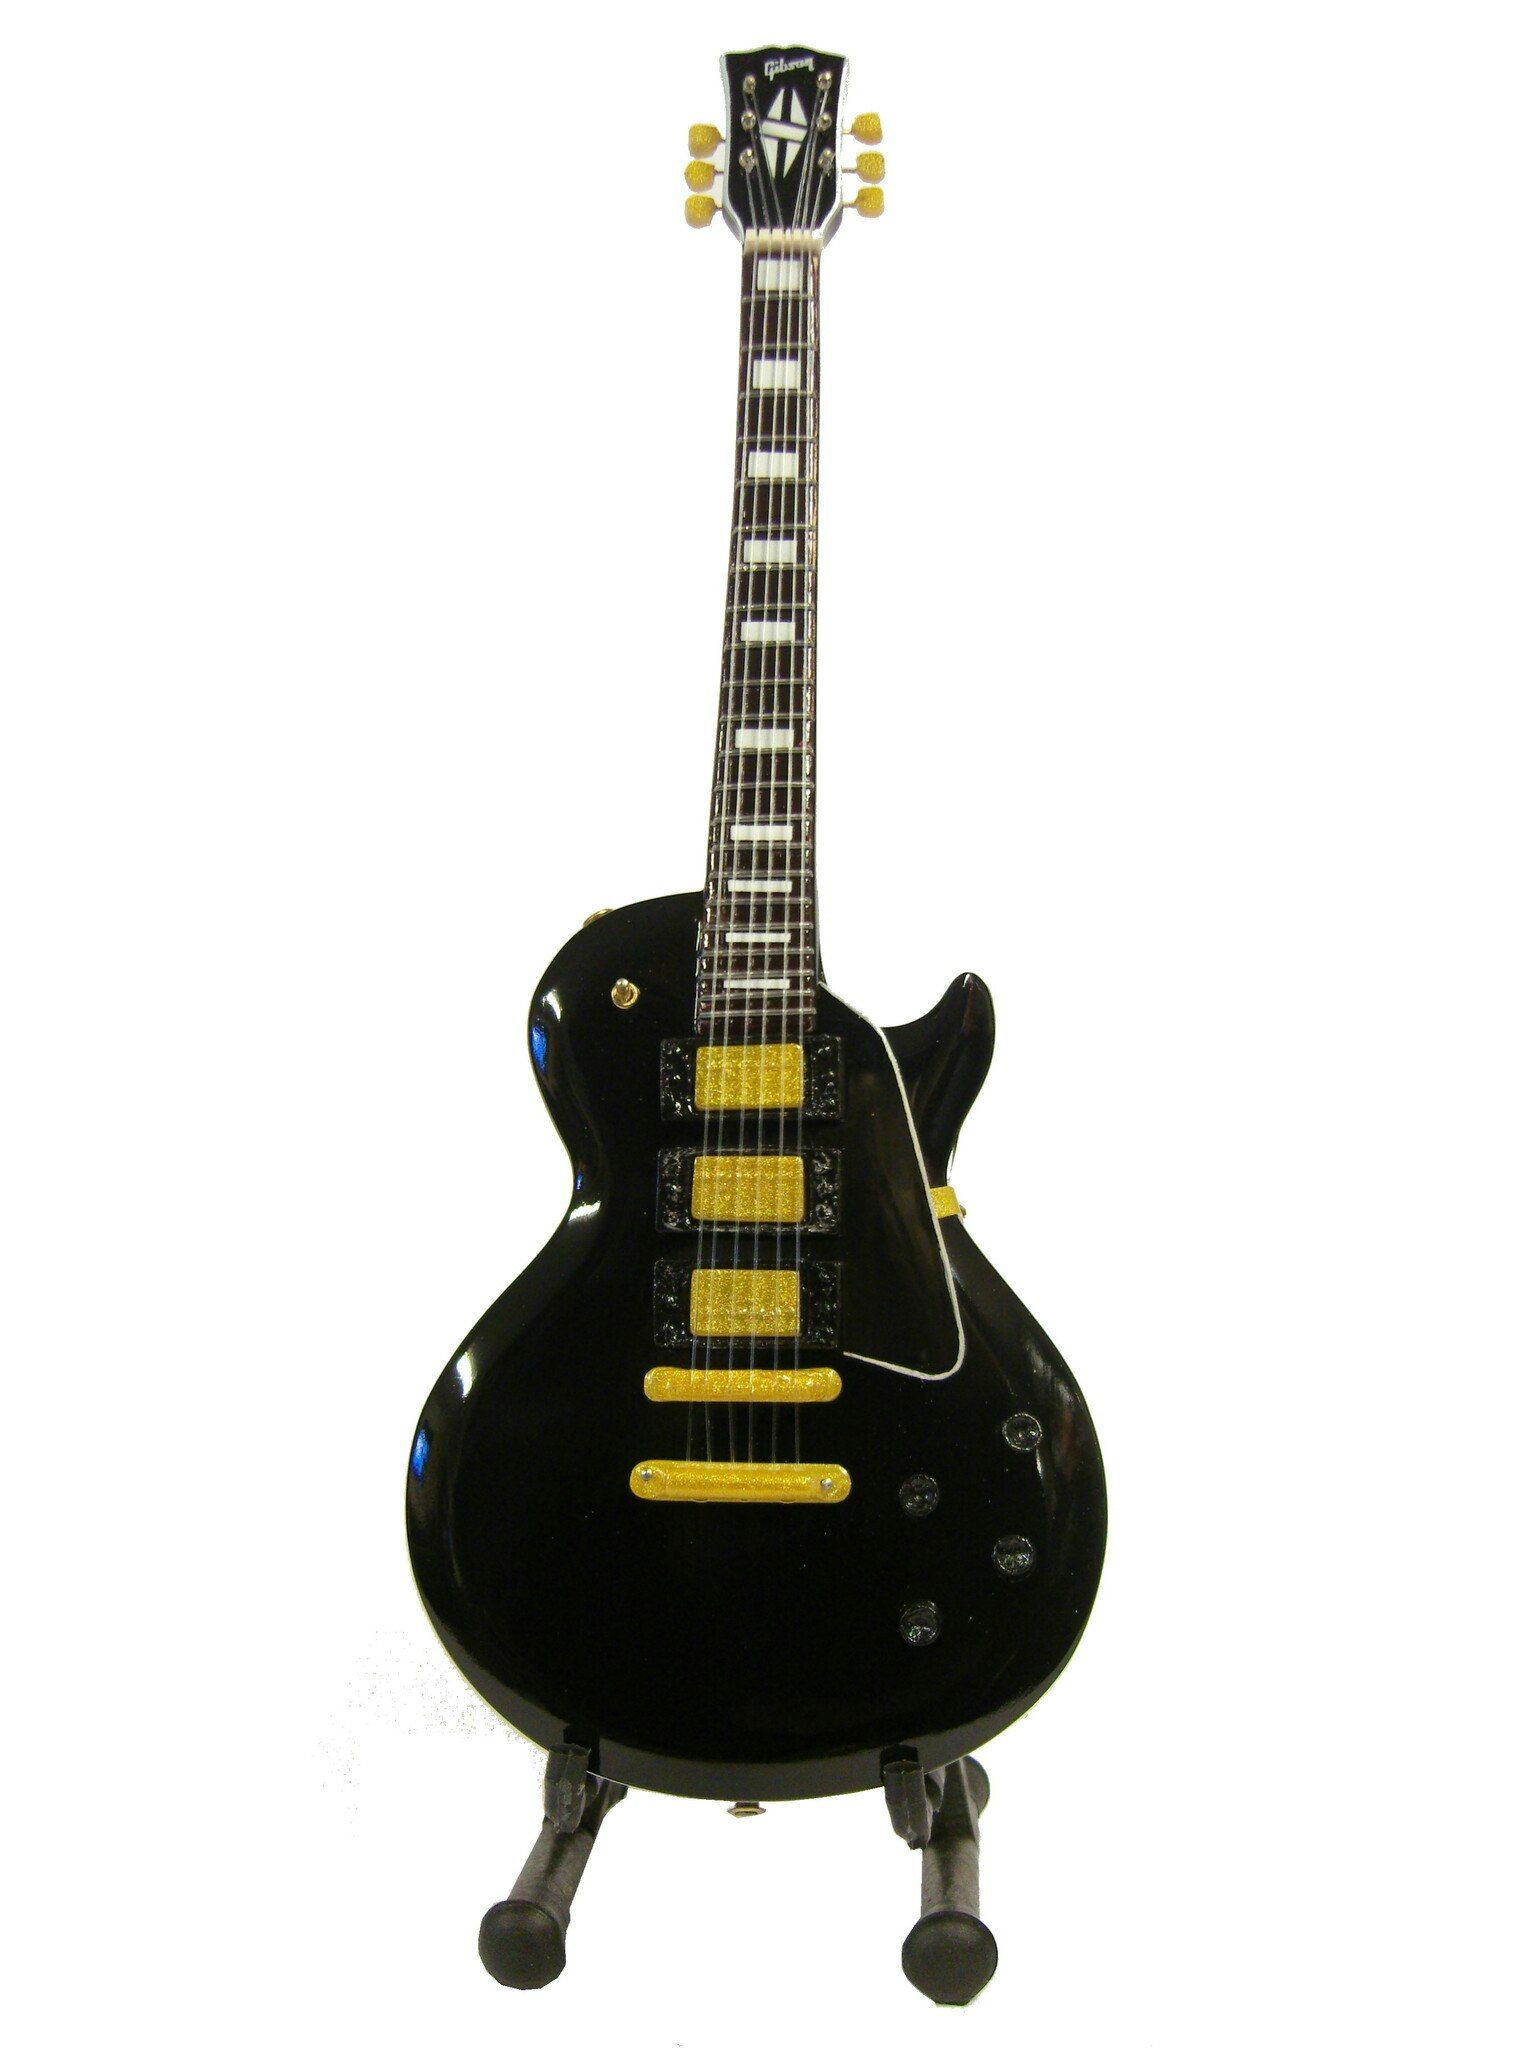 Gibson Les paul "Black beauty" replica.